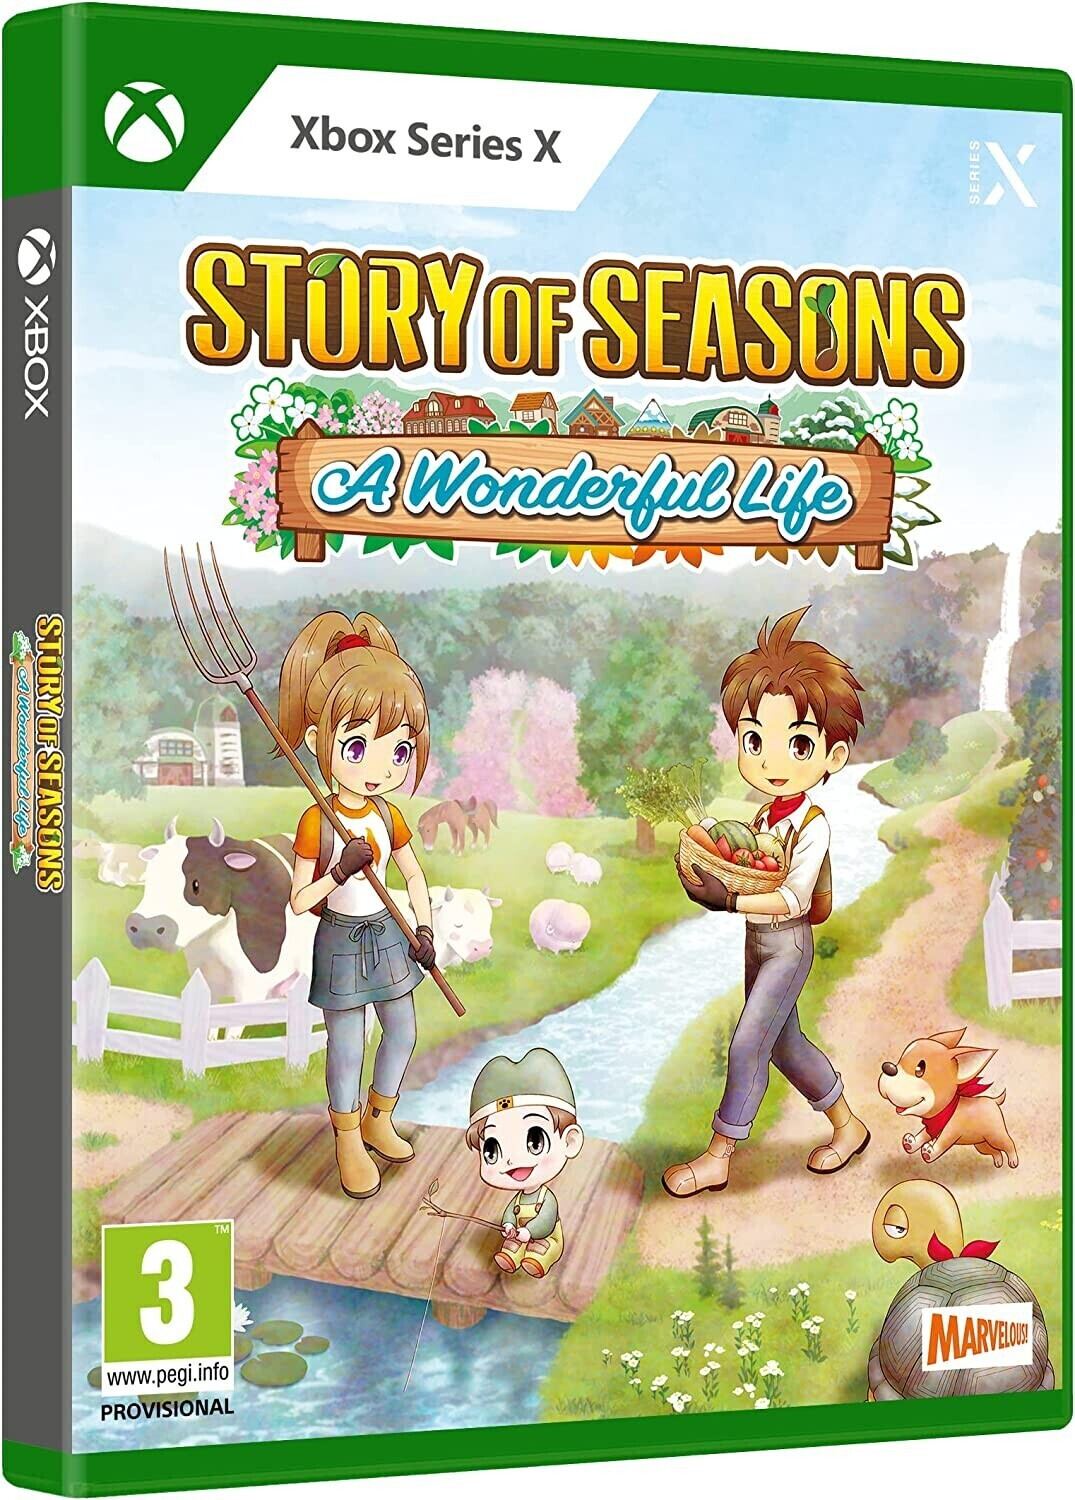 Photos - Game Marvelous Story of Seasons: A Wonderful Life (Xbox Series X)